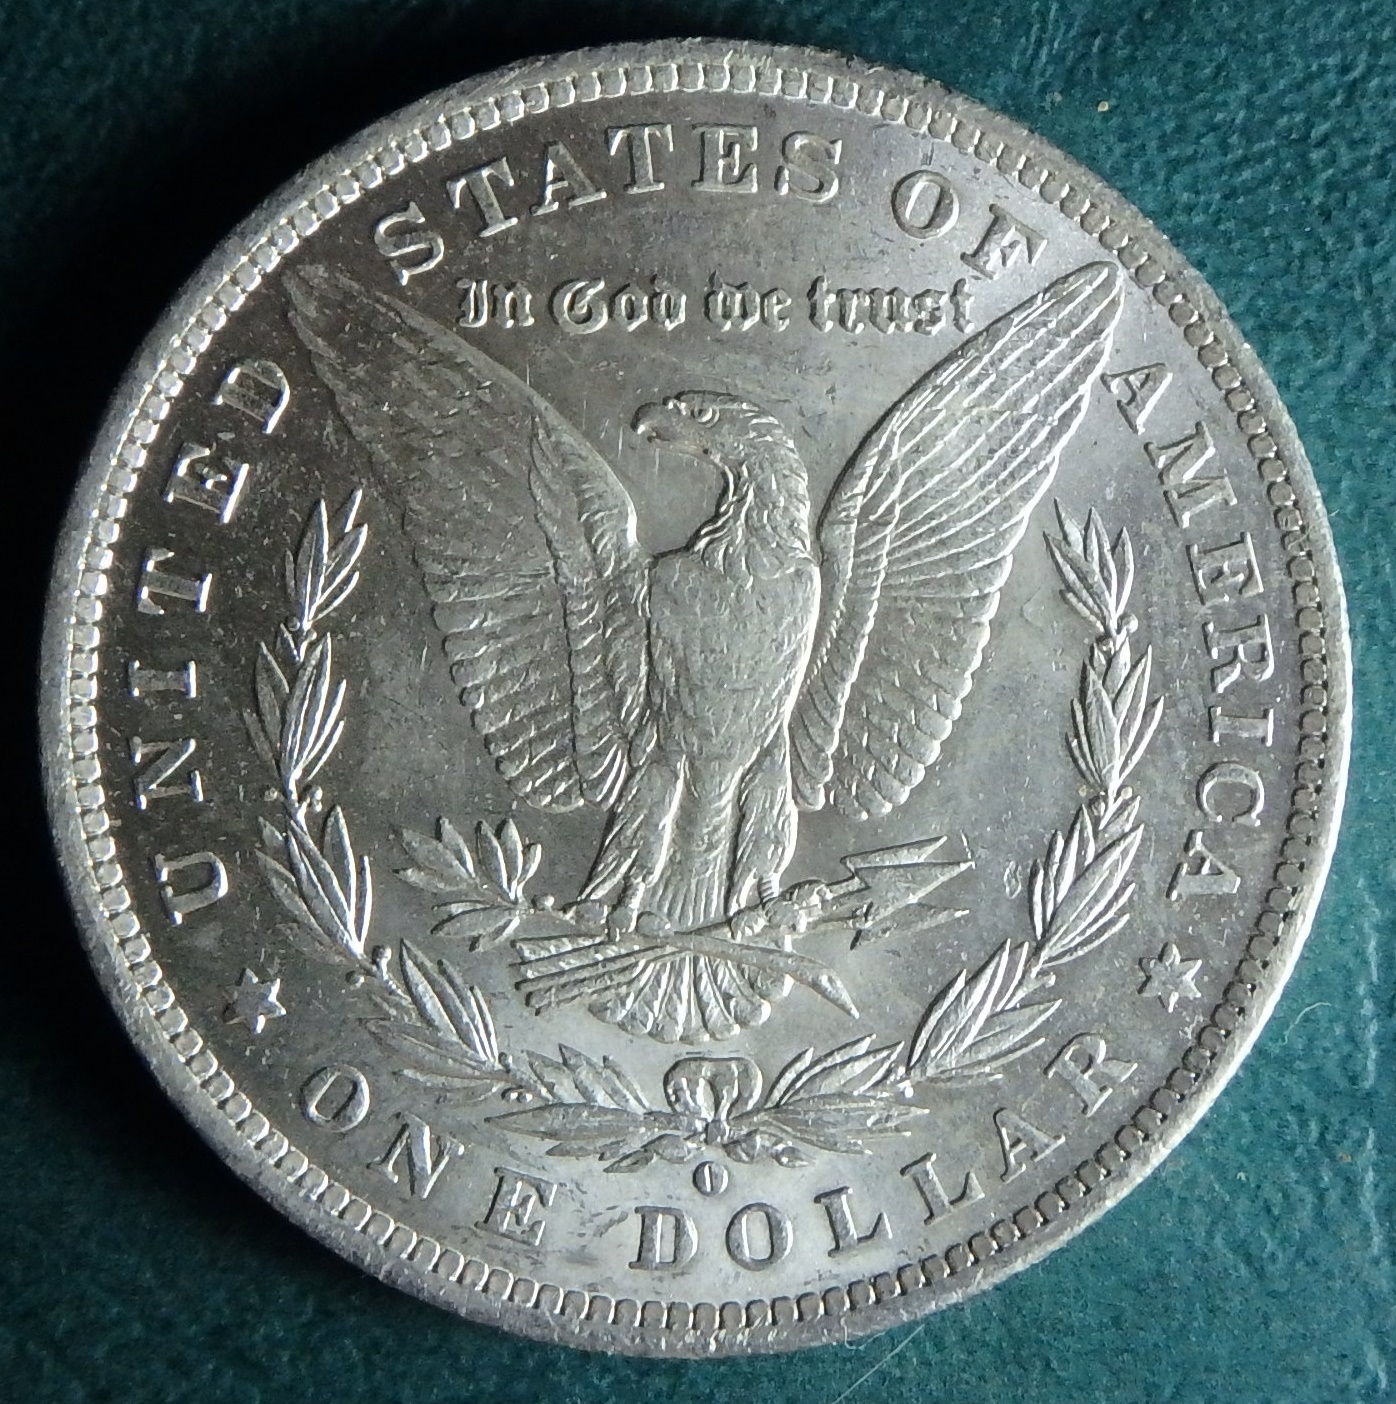 1884 O US 1 dol rev.JPG